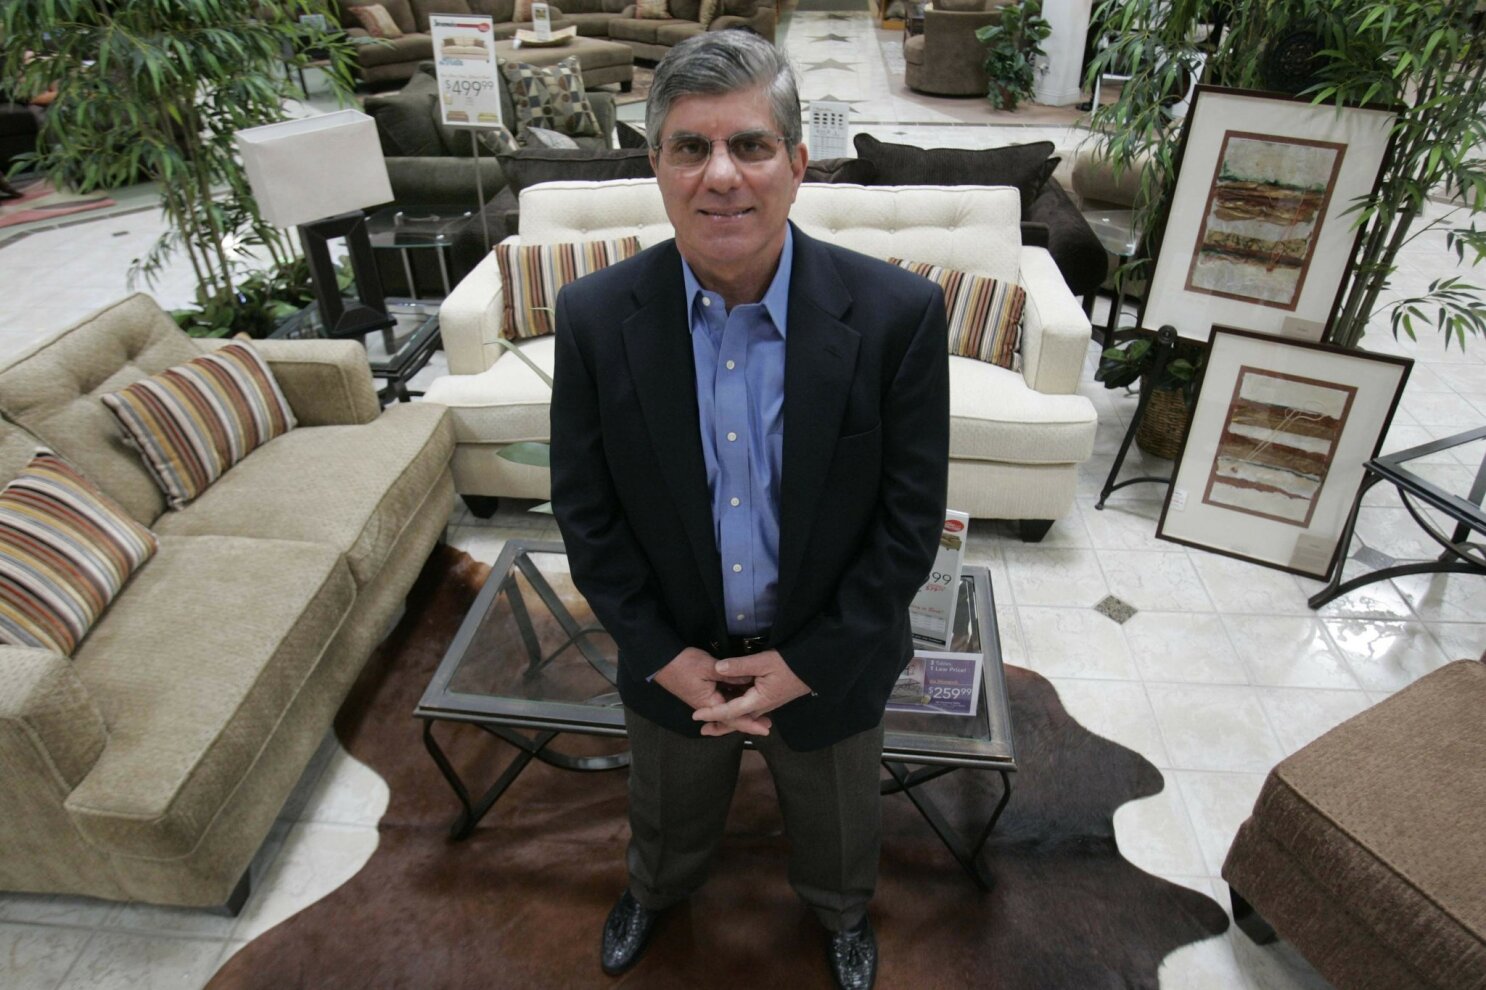 Sofa So Good Jerome S Furniture Boss The San Diego Union Tribune